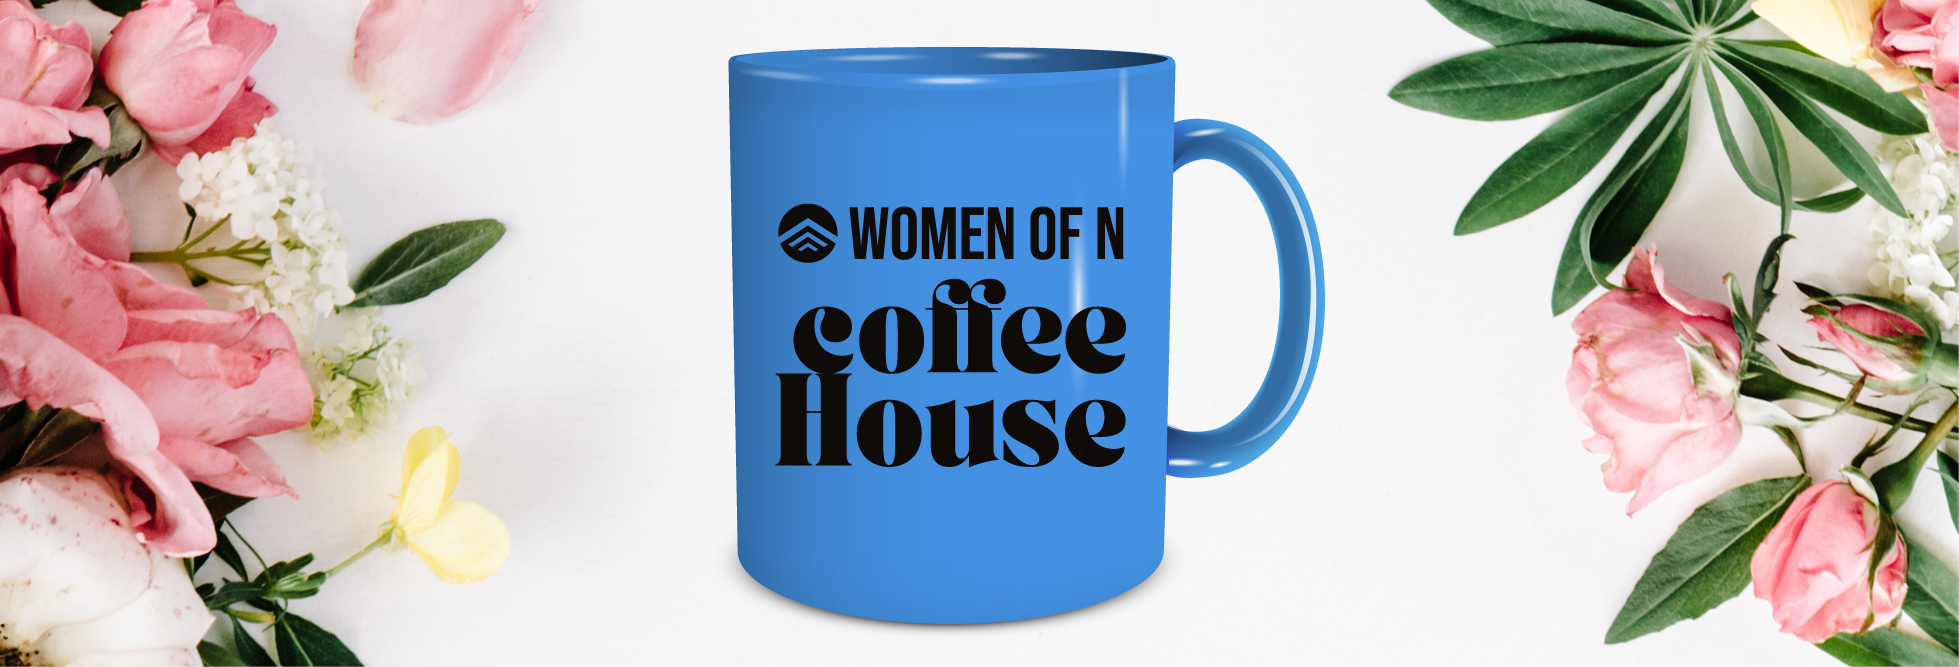 Women of N Coffee House